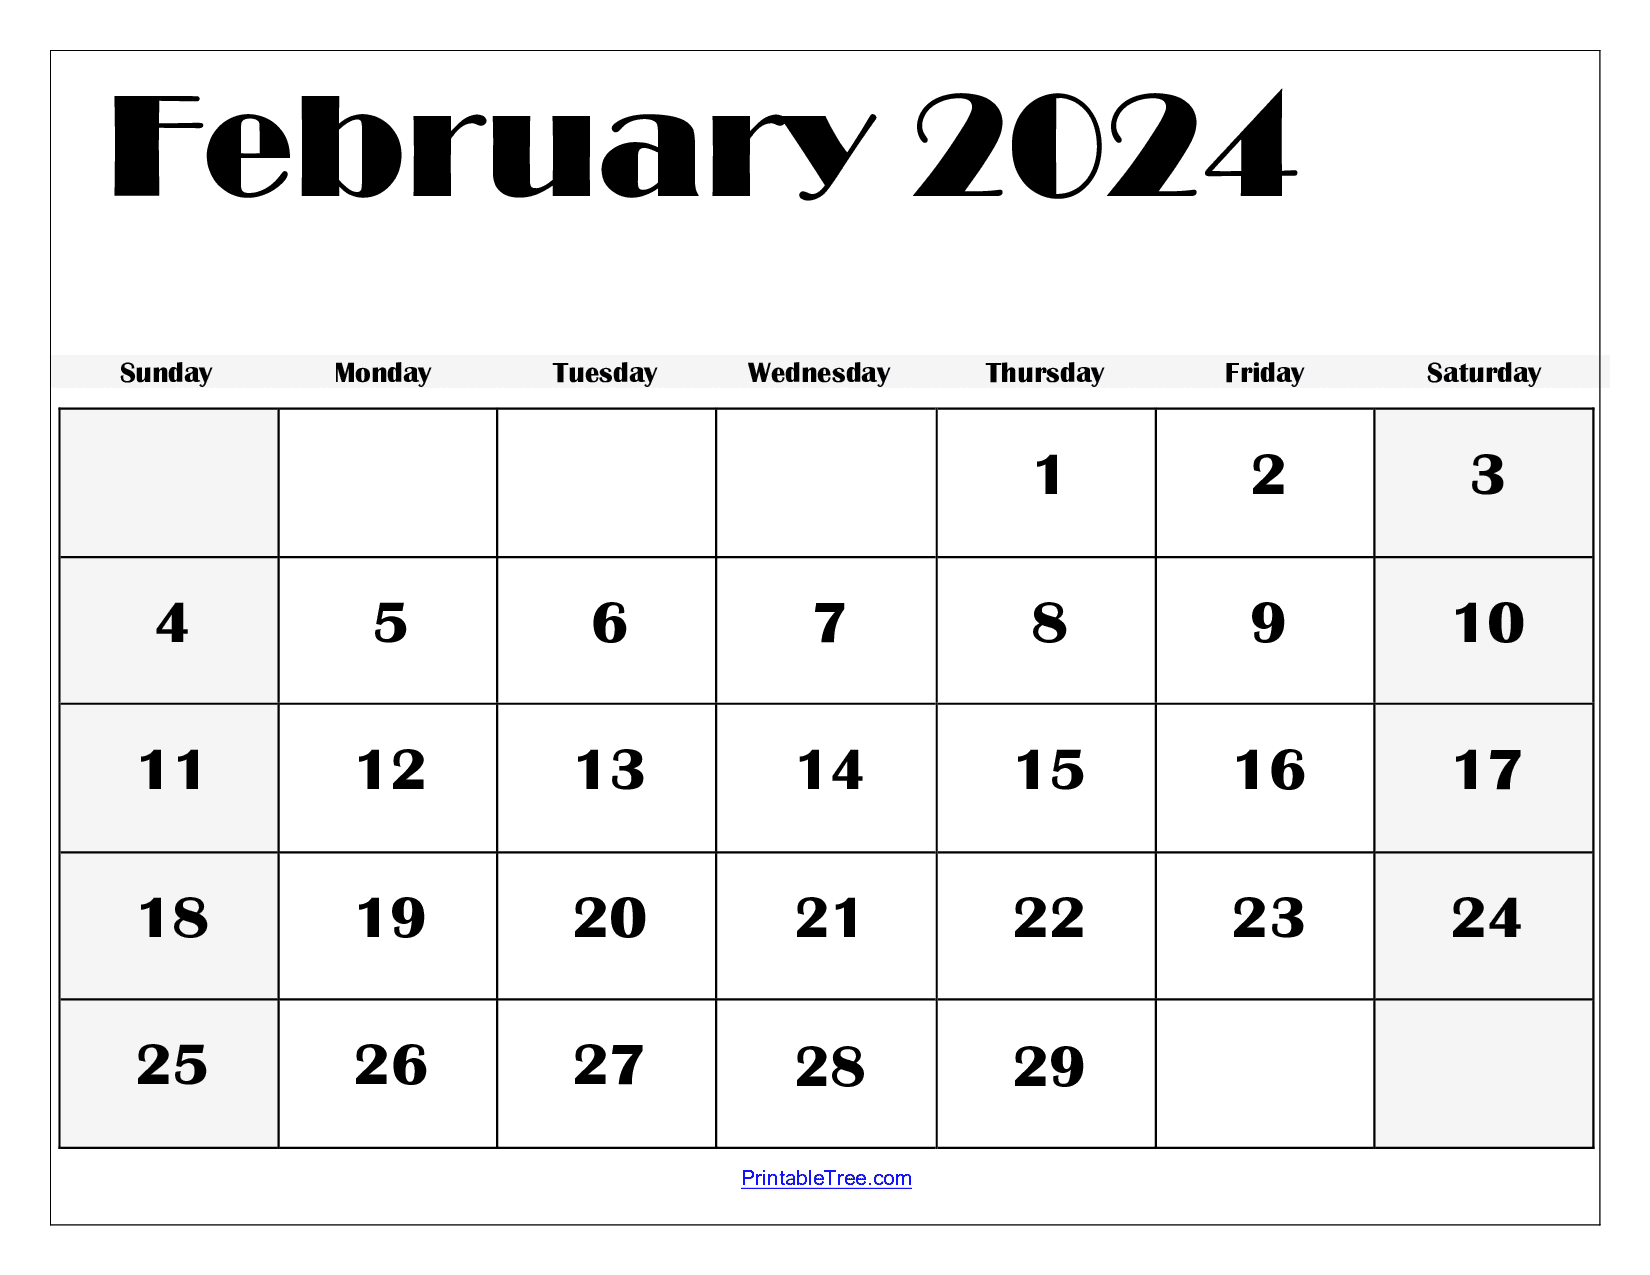 February 2024 Calendar Printable Pdf Template With Holidays for February 2024 Printable Calendar With Holidays